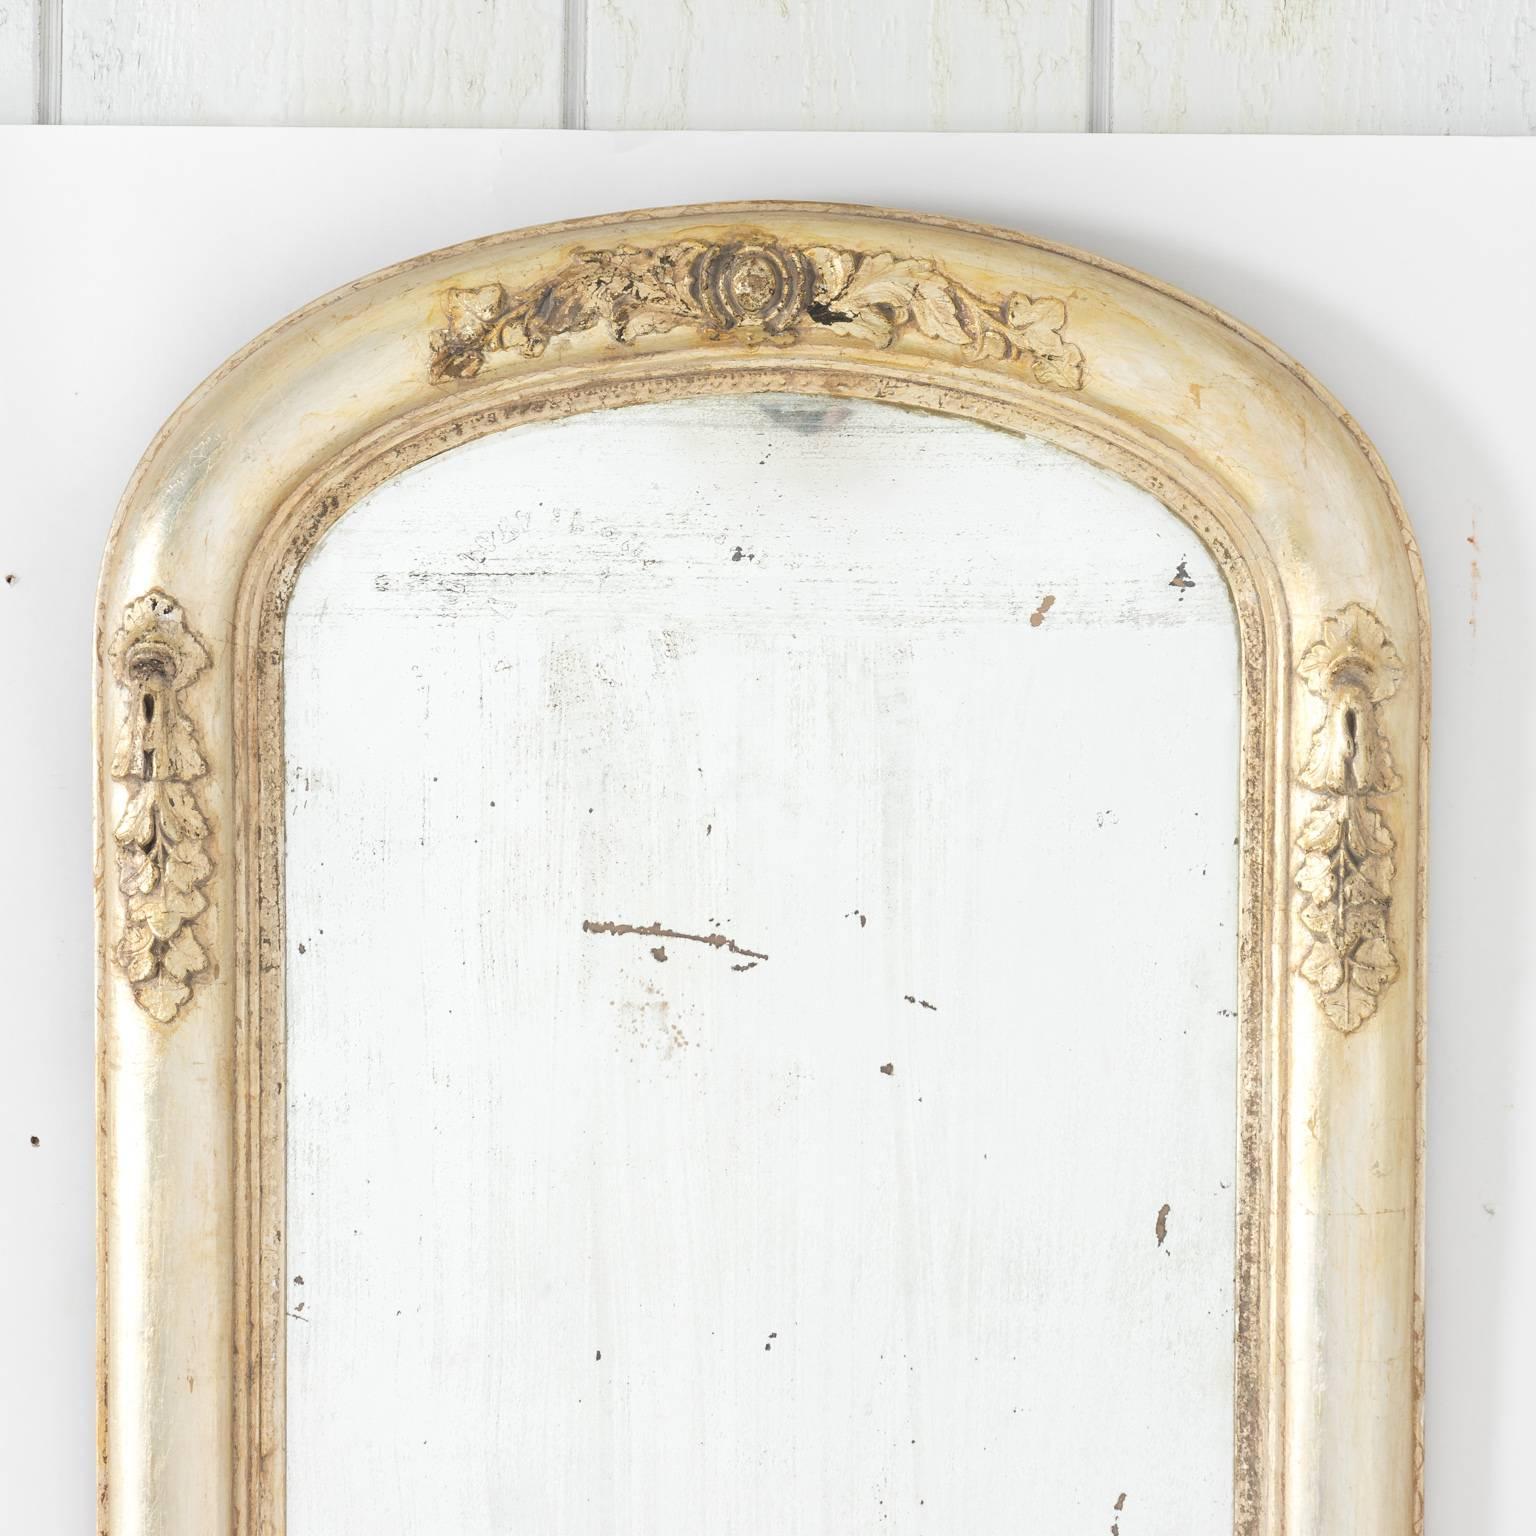 American Rococo style mirror in a silver leaf frame, circa late 19th century.
 